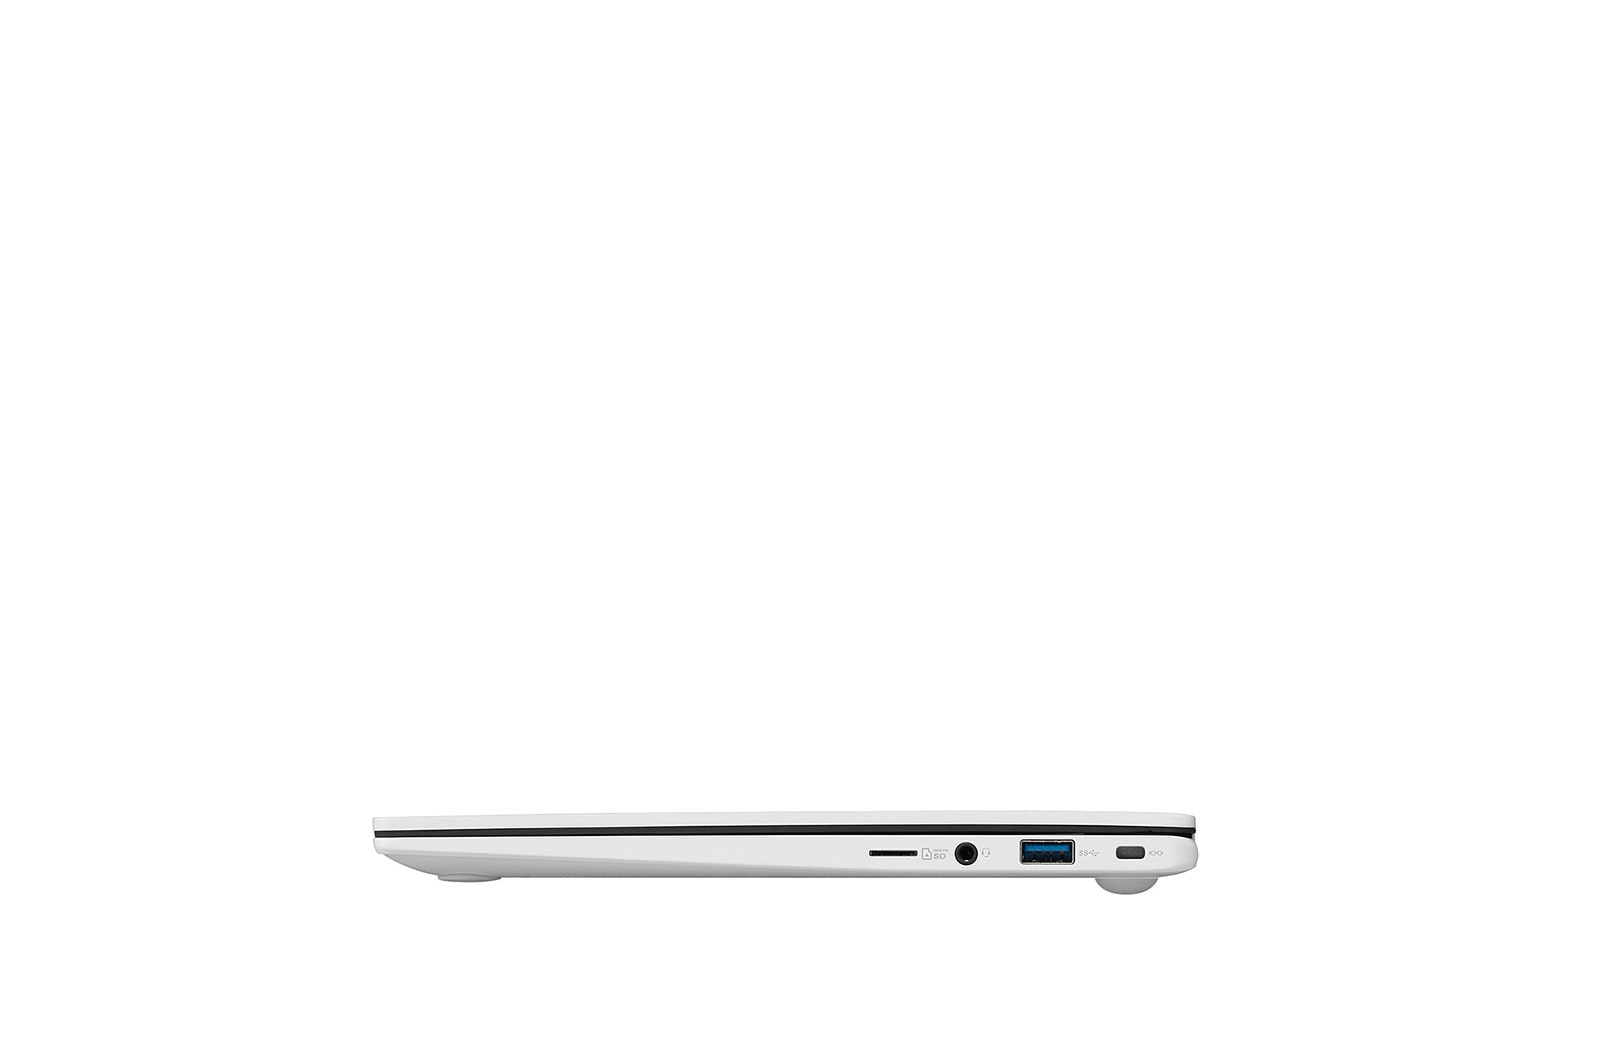 LG 13U70P Windows 11 Home - Portátil de 13” FHD IPS (980g, autonomía 11,5h, AMD Ryzen™ 4700, 16GB RAM, 512GB SSD NVMe) Blanco – Español | LG España